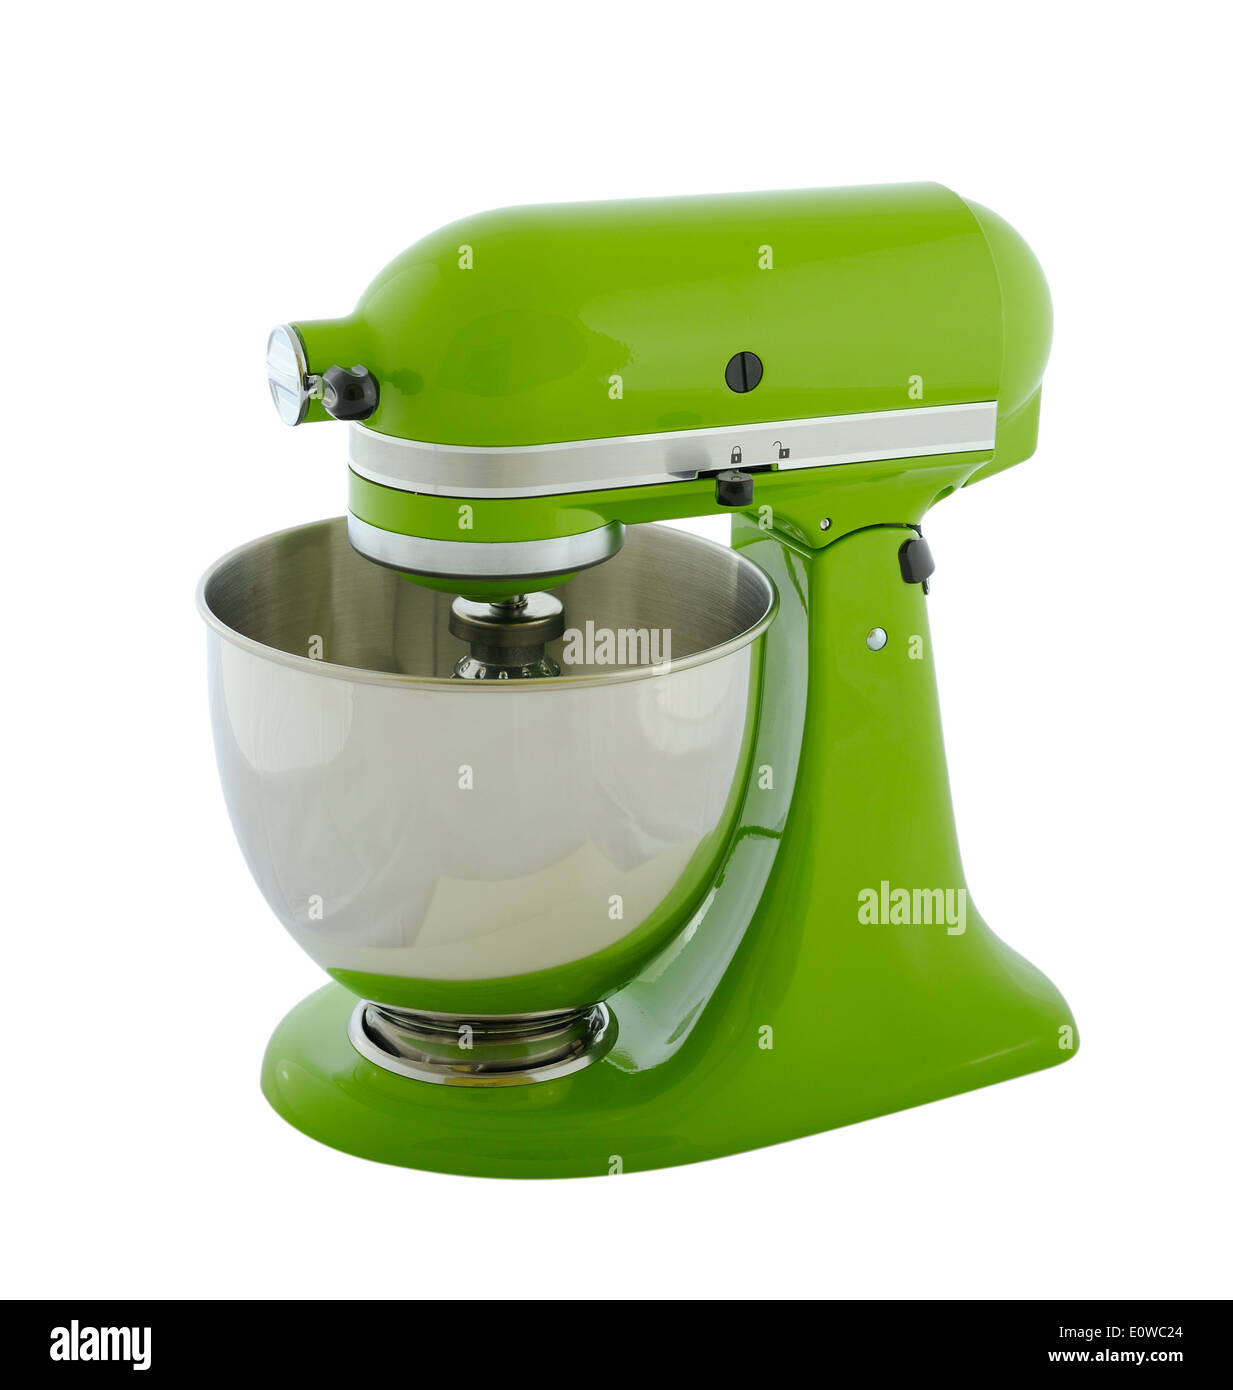 Kitchen appliances - green planetary mixer, isolated on a white background Stock Photo